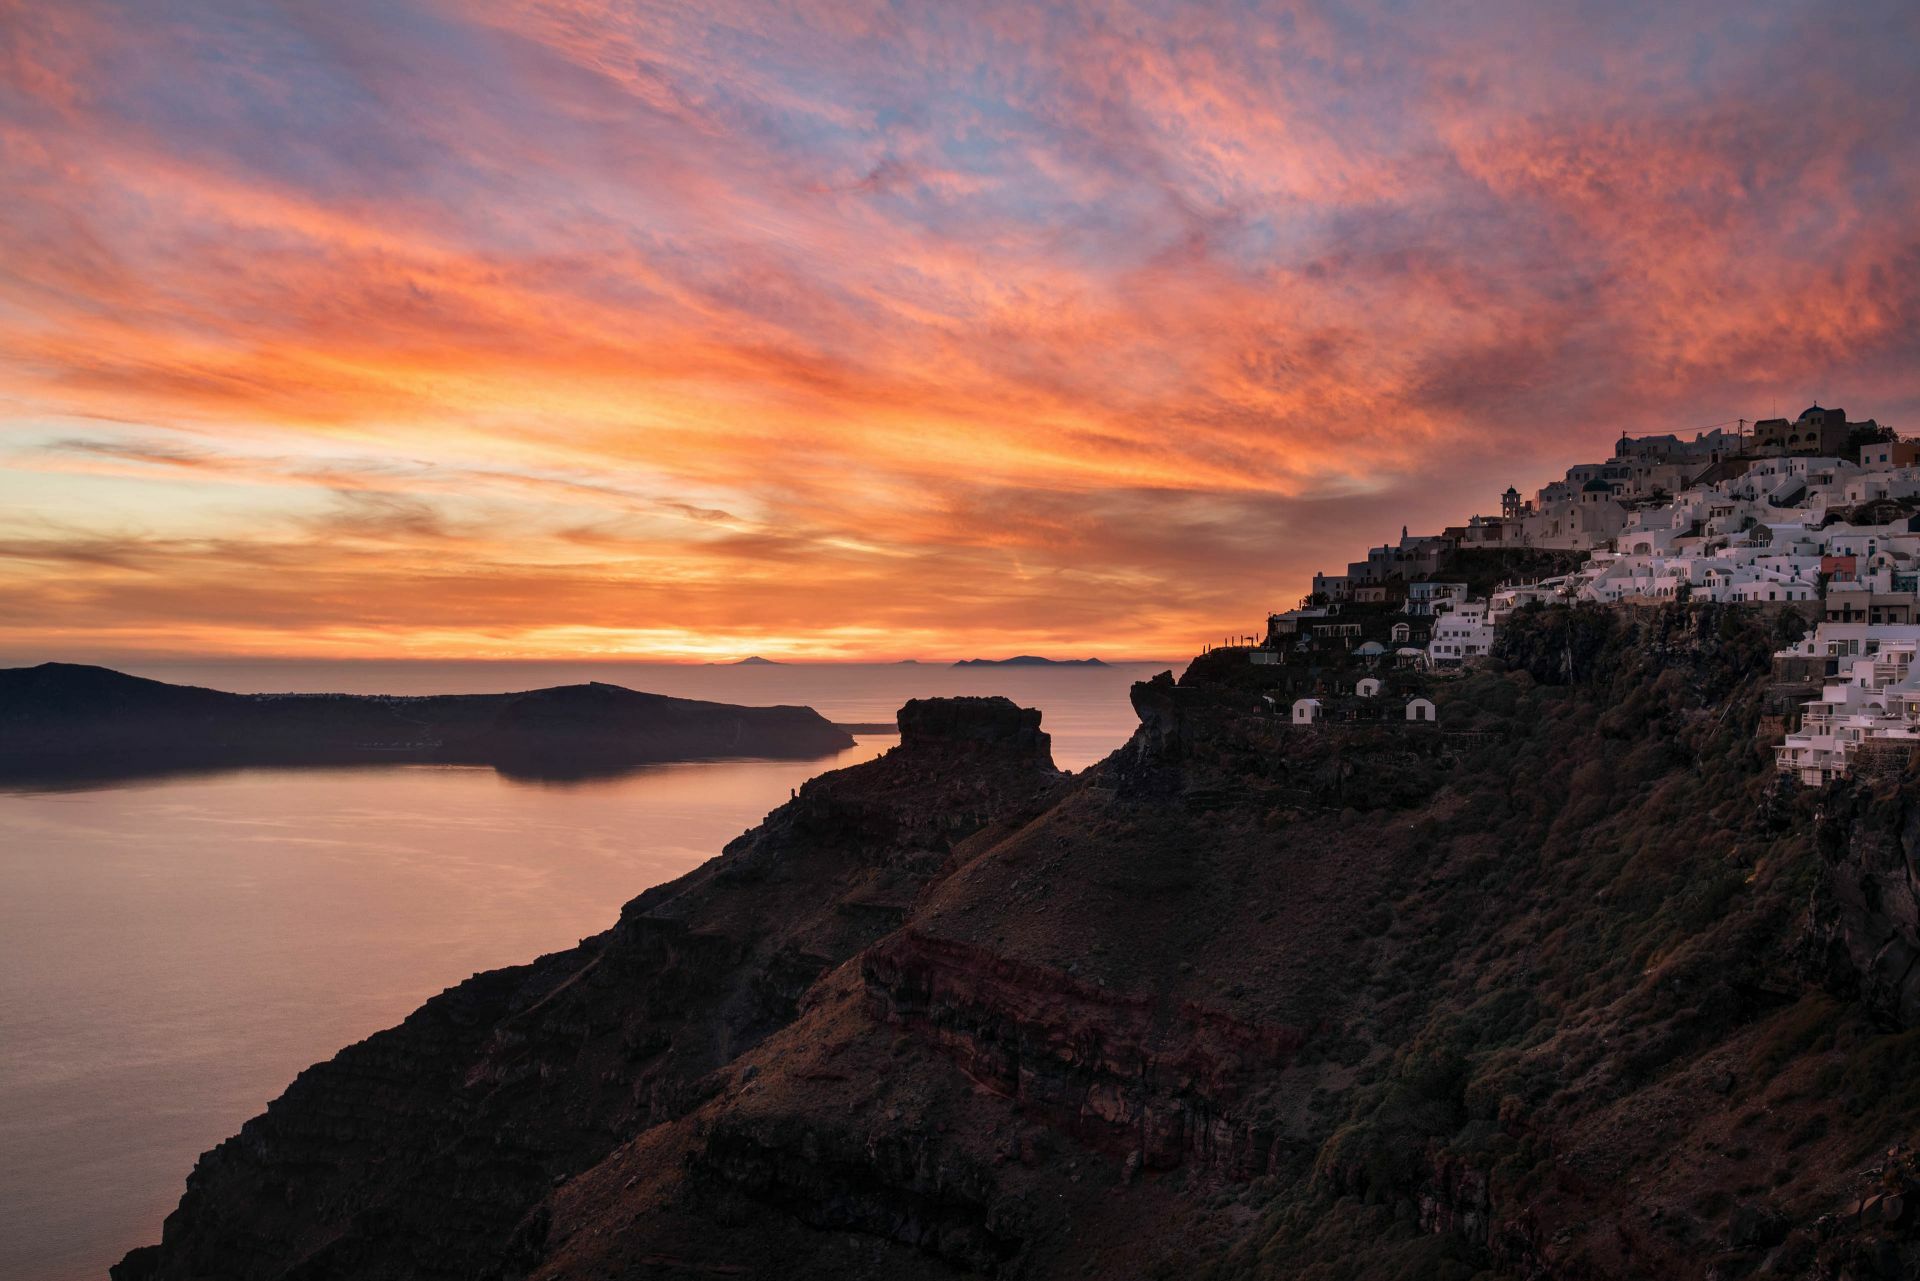 The beautiful island of Santorini, the most popular destination in Greece